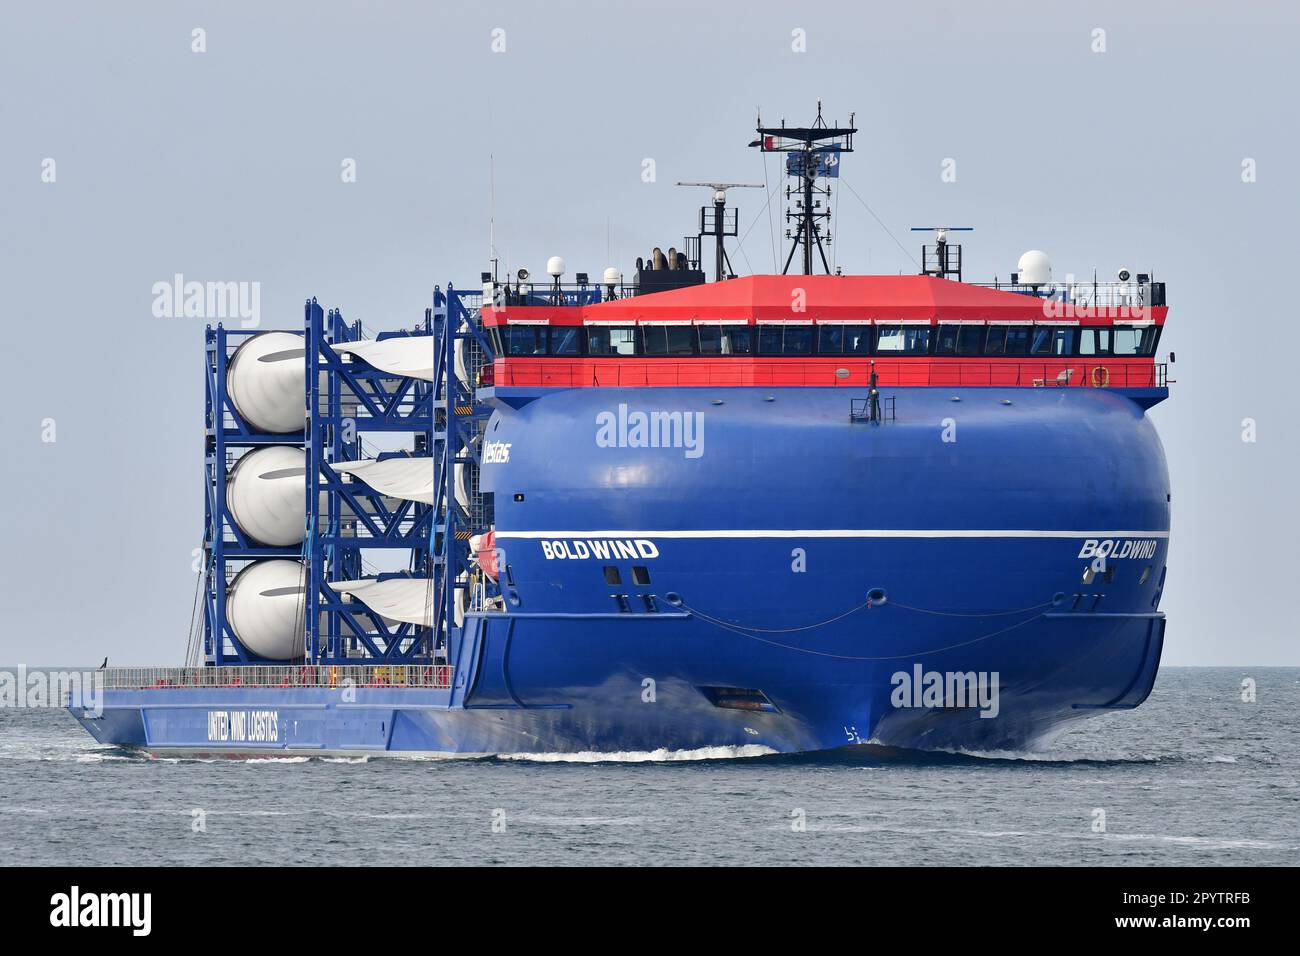 Heavy Load Carrier BOLDWIND at the Kiel Fjord Stock Photo